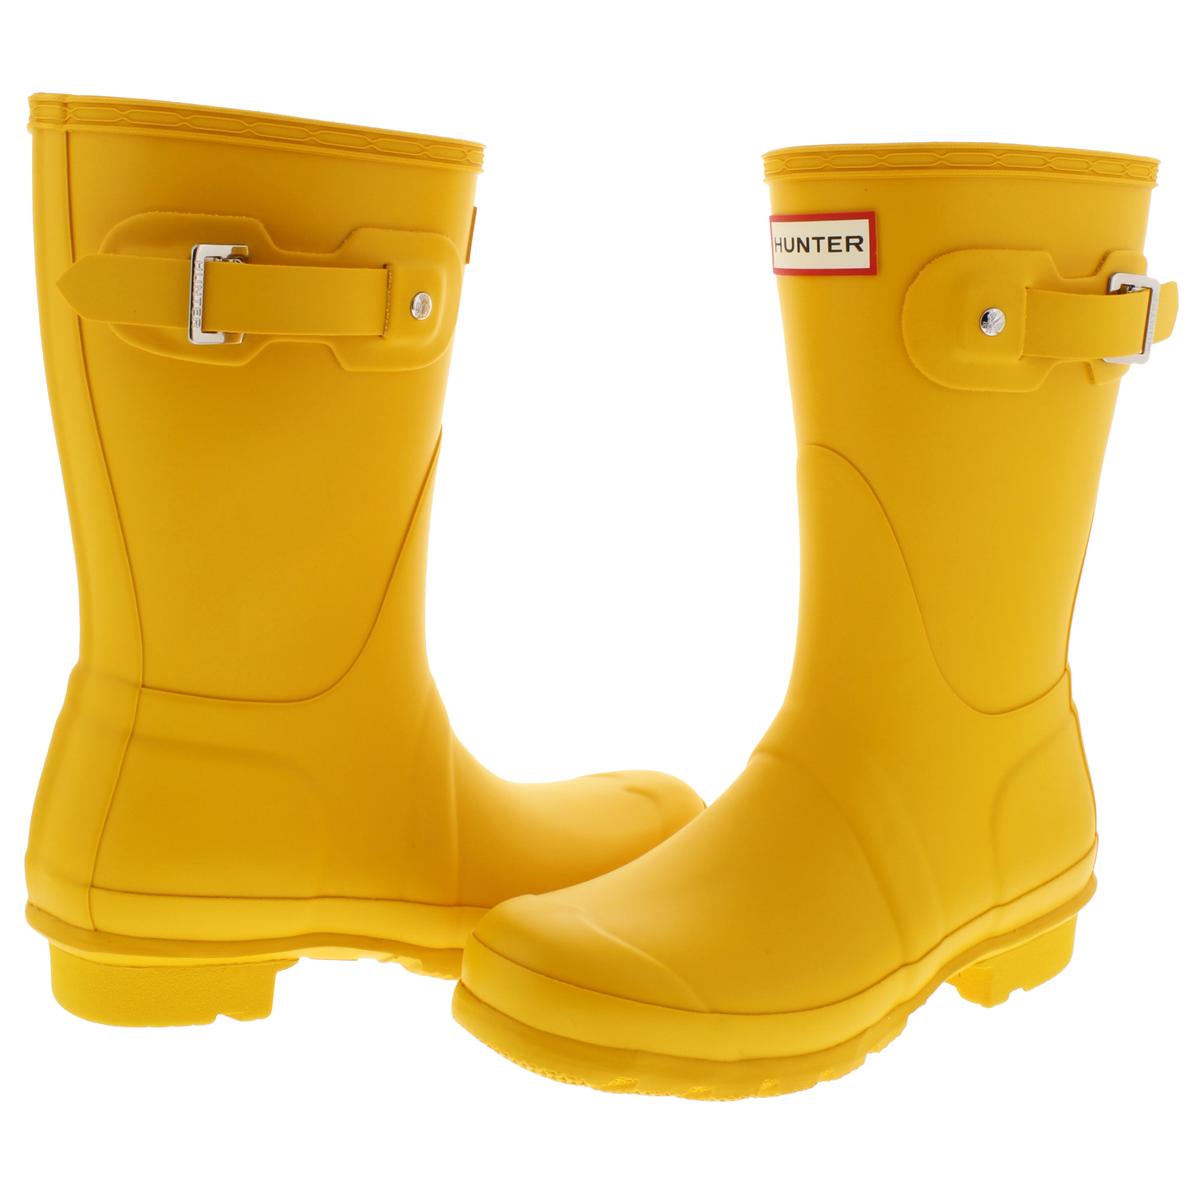 Hunter Women's Original Short Rain Boots | eBay